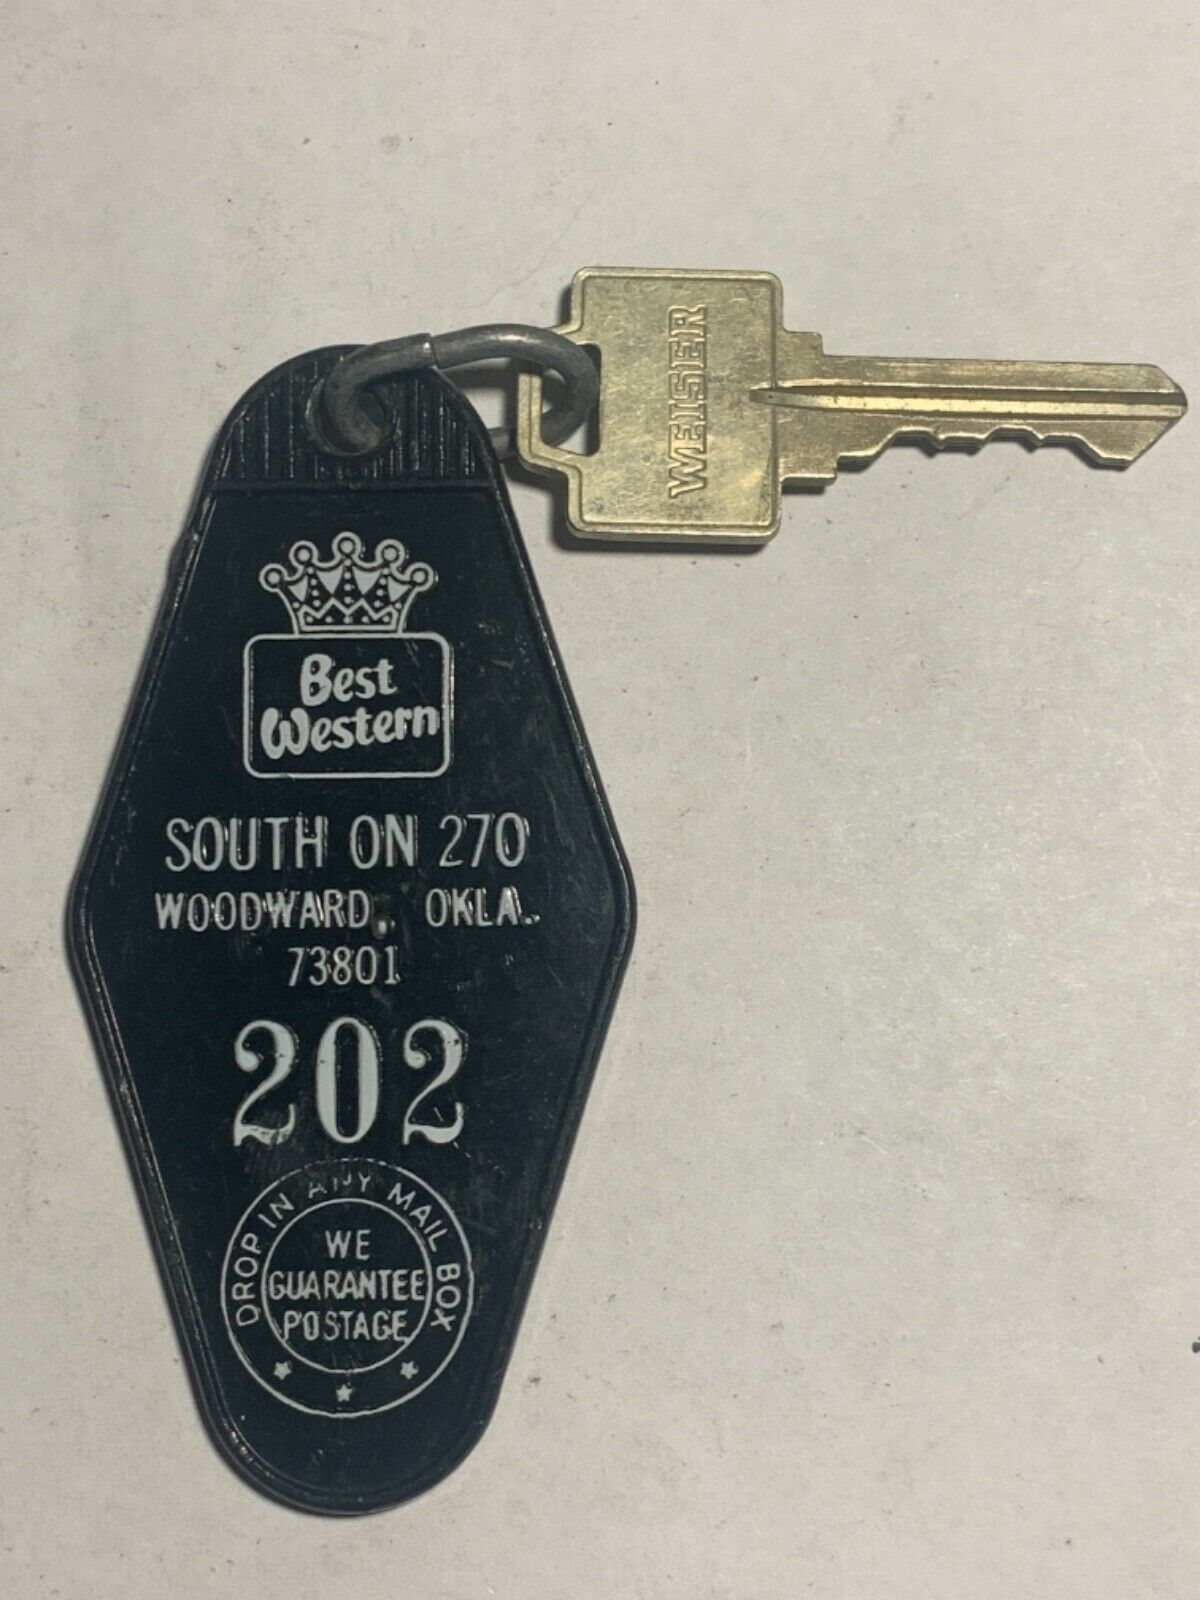 Best Western Hotel Motel Room Key Fob With Key Woodward Oklahoma #202